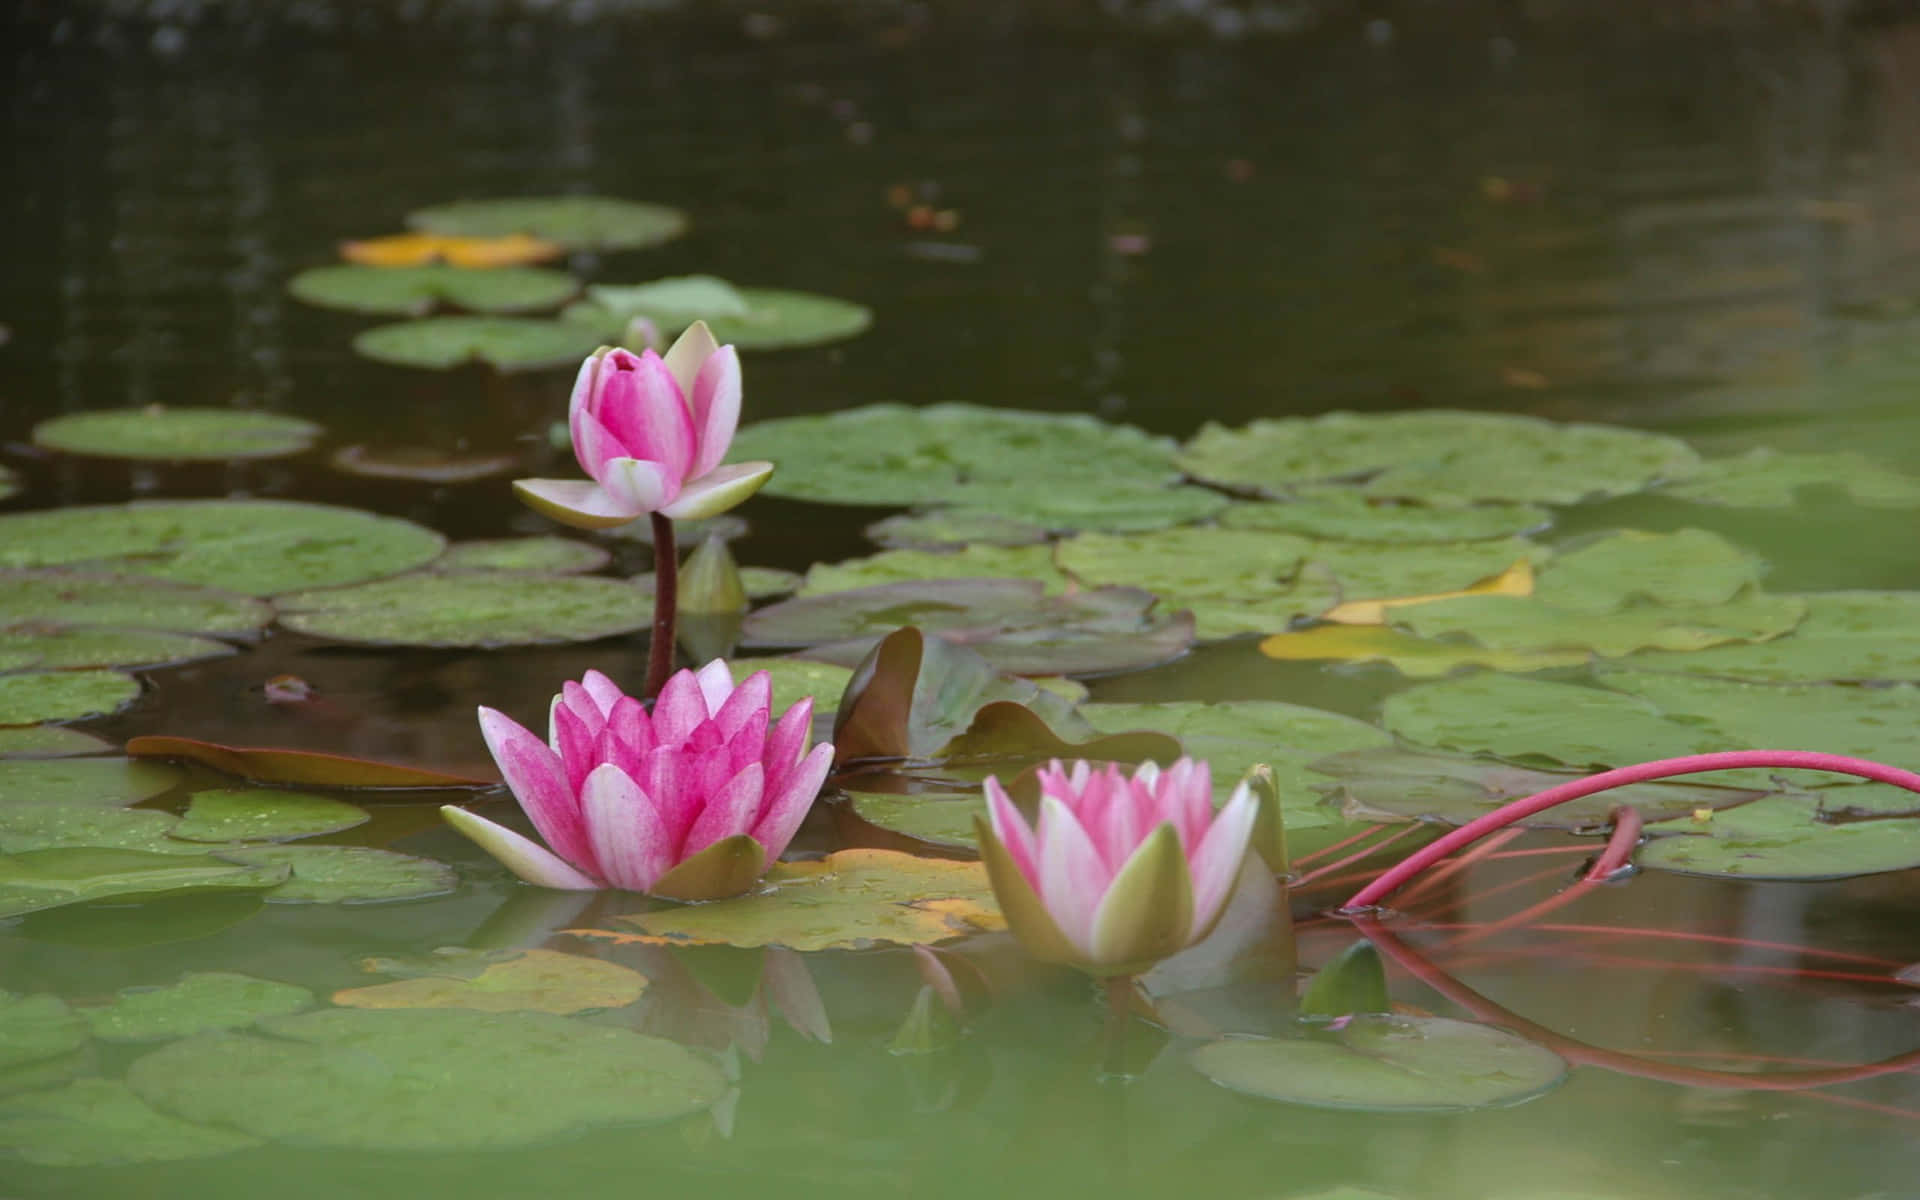 A beautiful Lotus flower in full bloom.